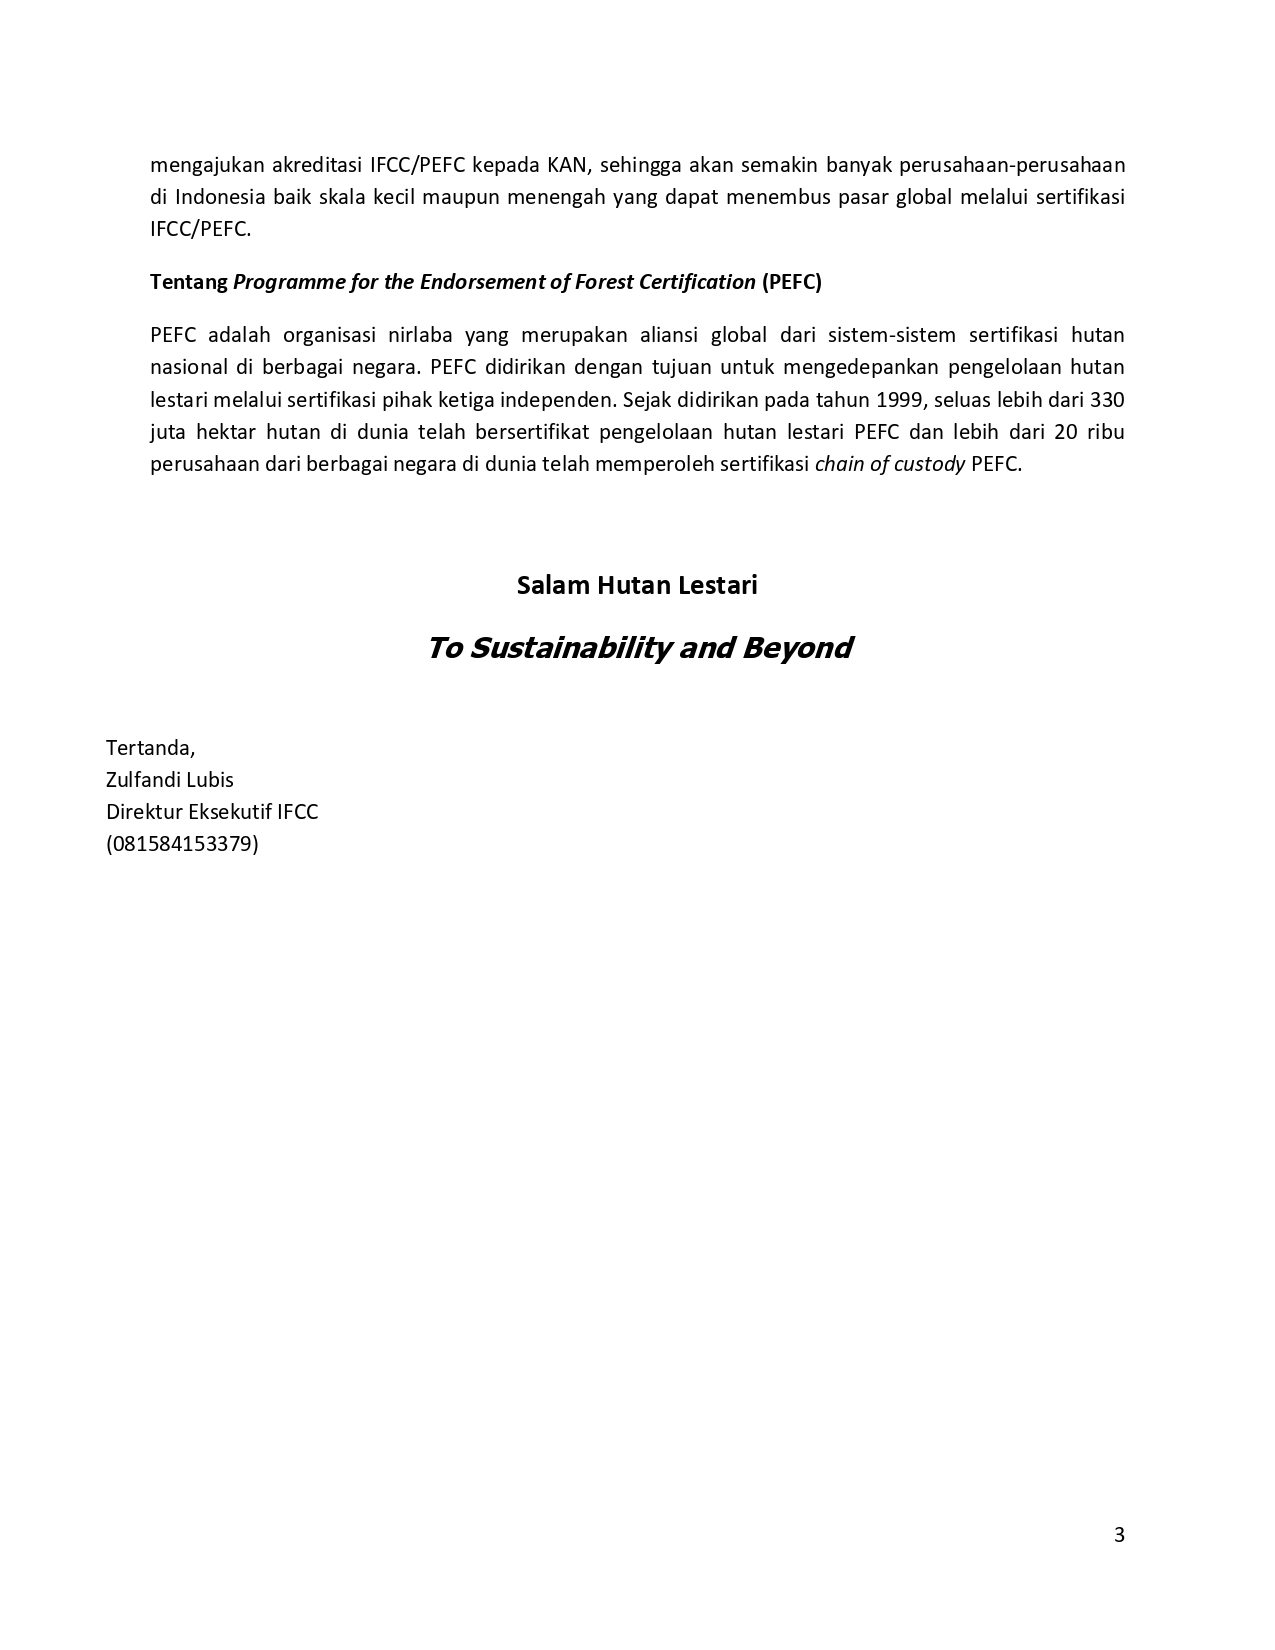 230201 - Media Release_Akreditasi KAN kepada PT MAL_final_page-0003.jpg